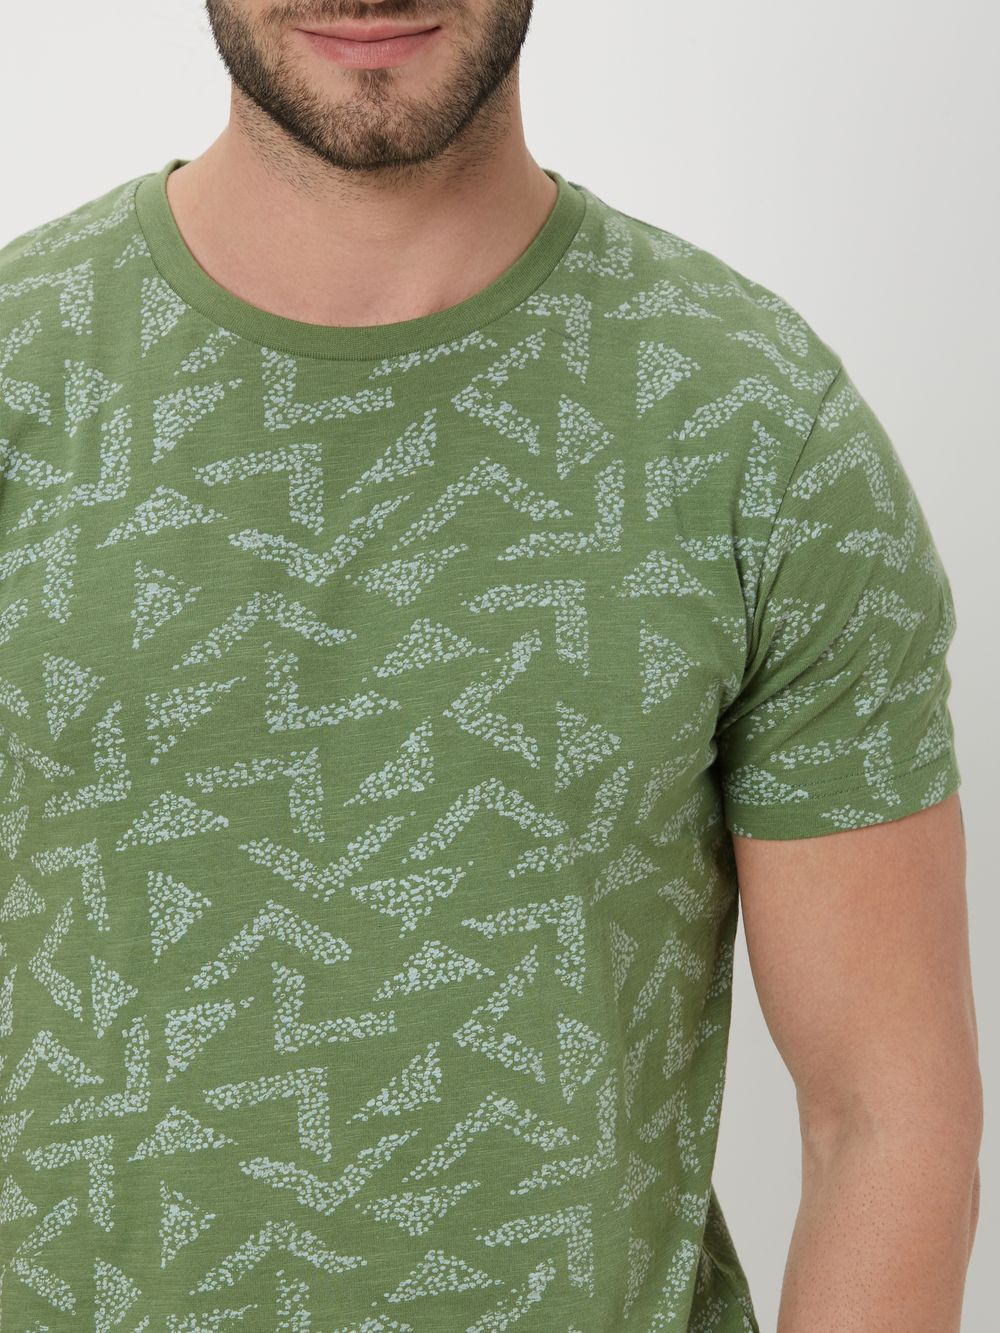 Olive & Light Olive Geometric Print T-Shirt